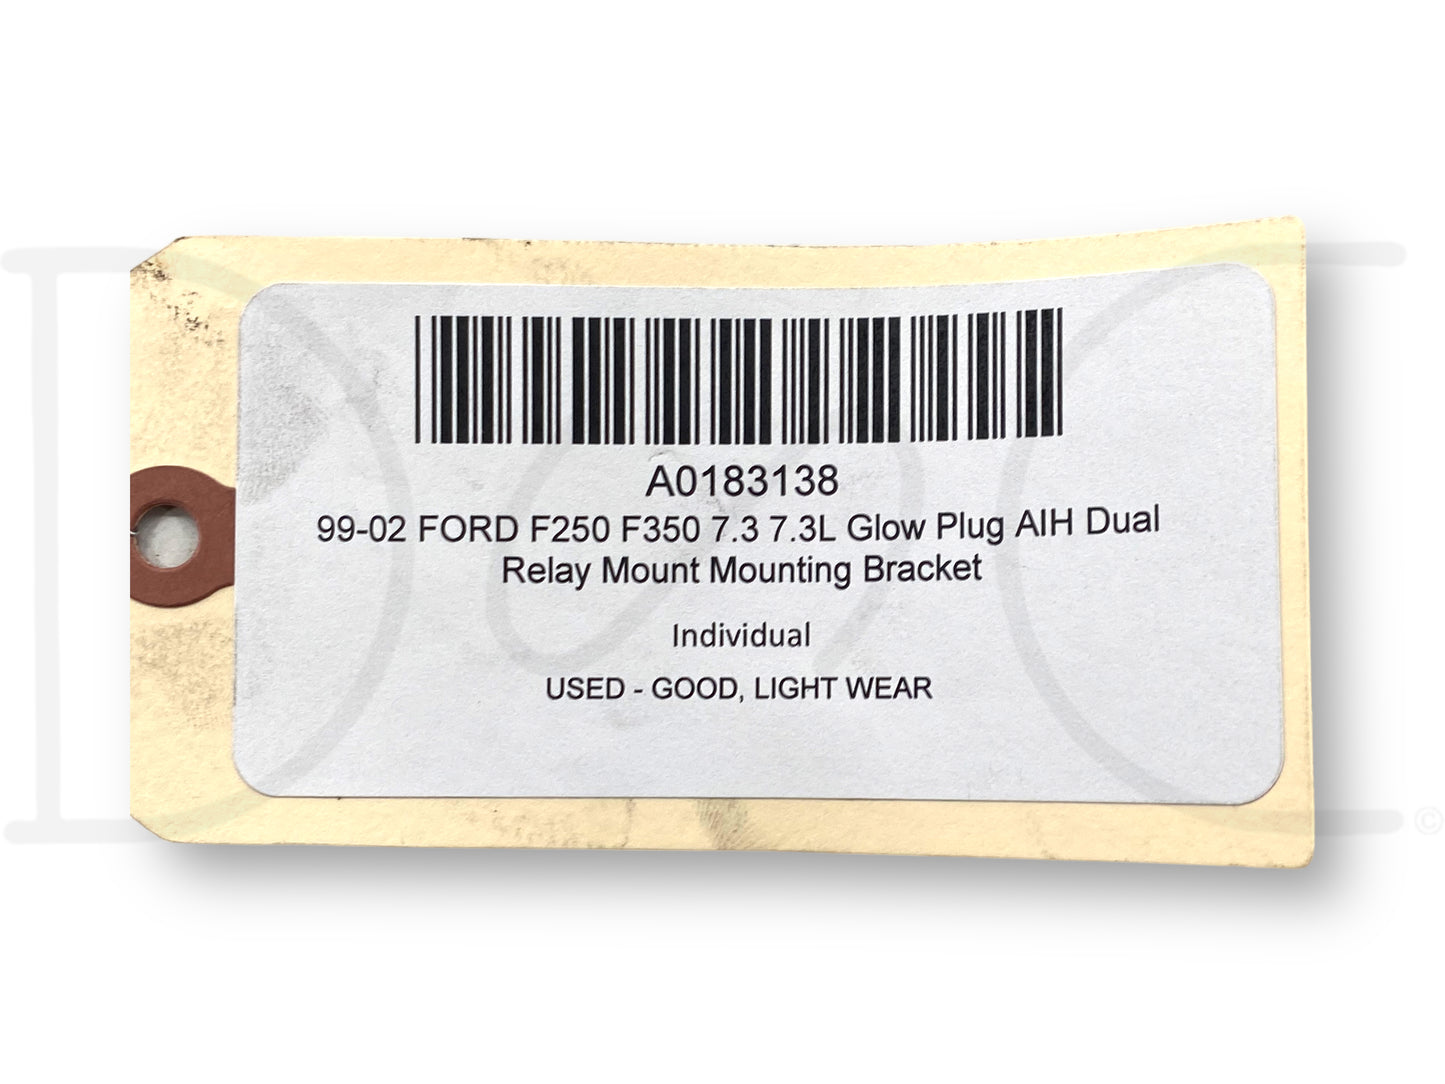 99-02 Ford F250 F350 7.3 7.3L Glow Plug AIH Dual Relay Mount Mounting Bracket